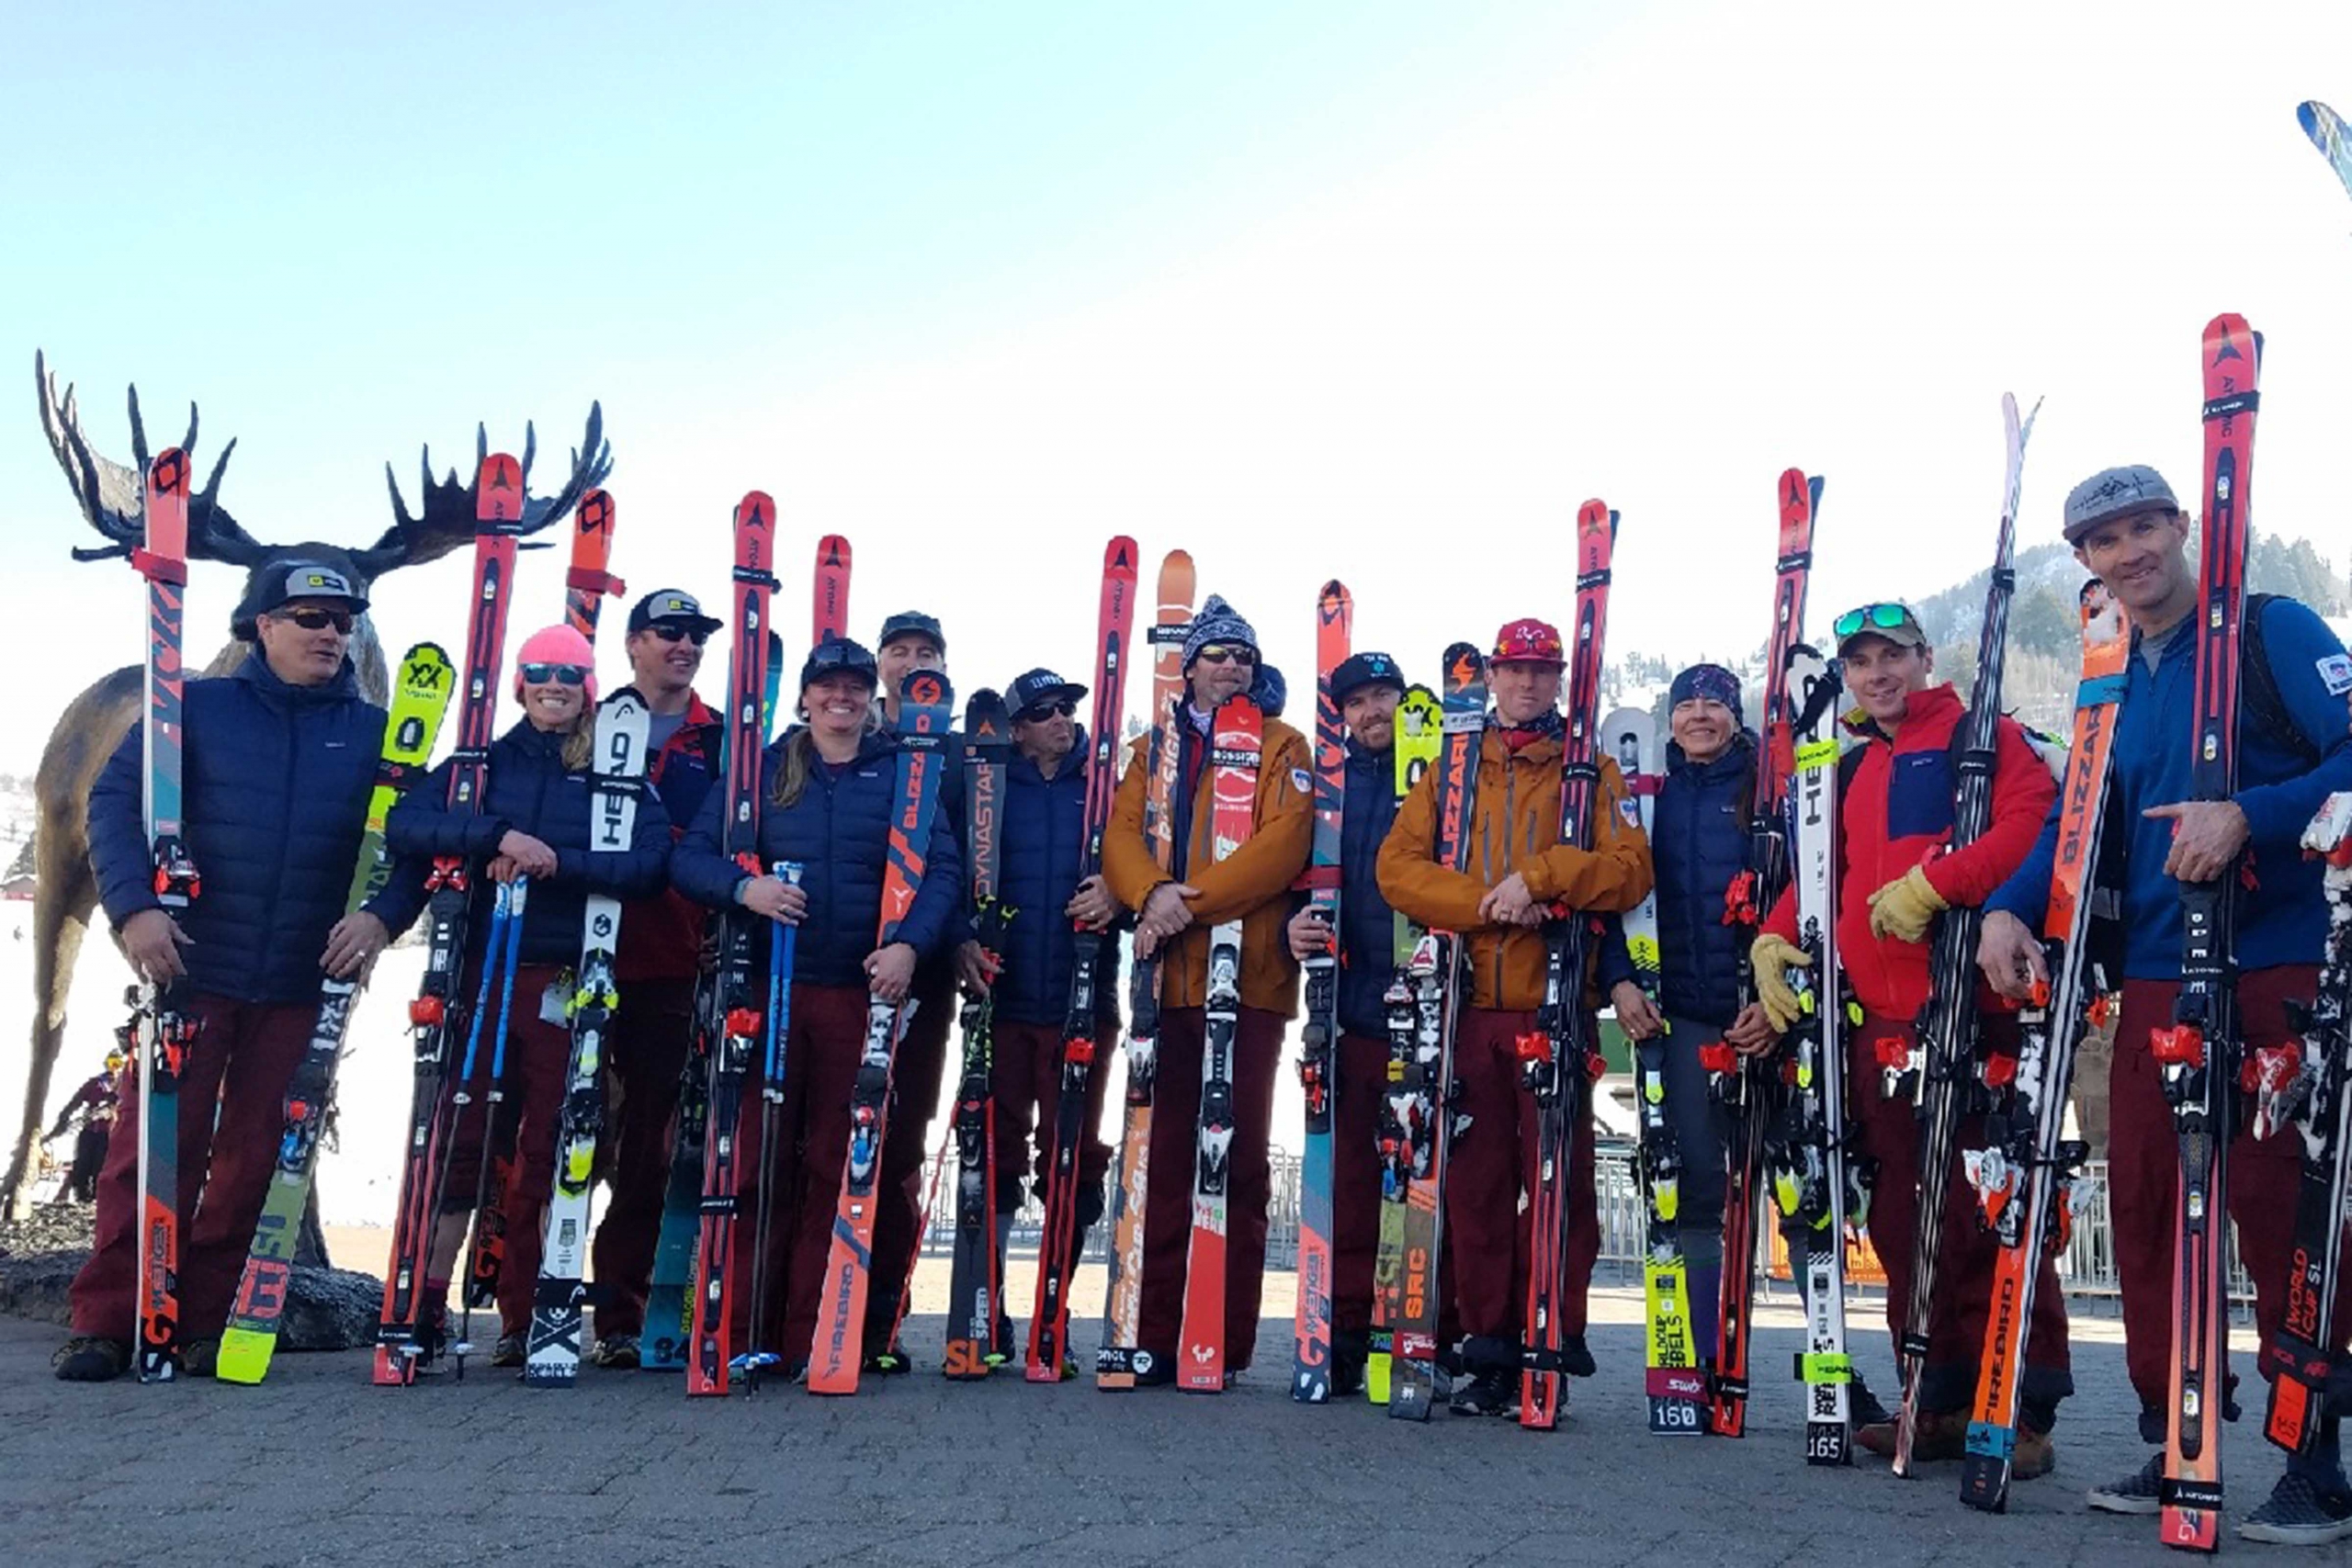 The PSIA Alpine Team holding Atomic Super G skis